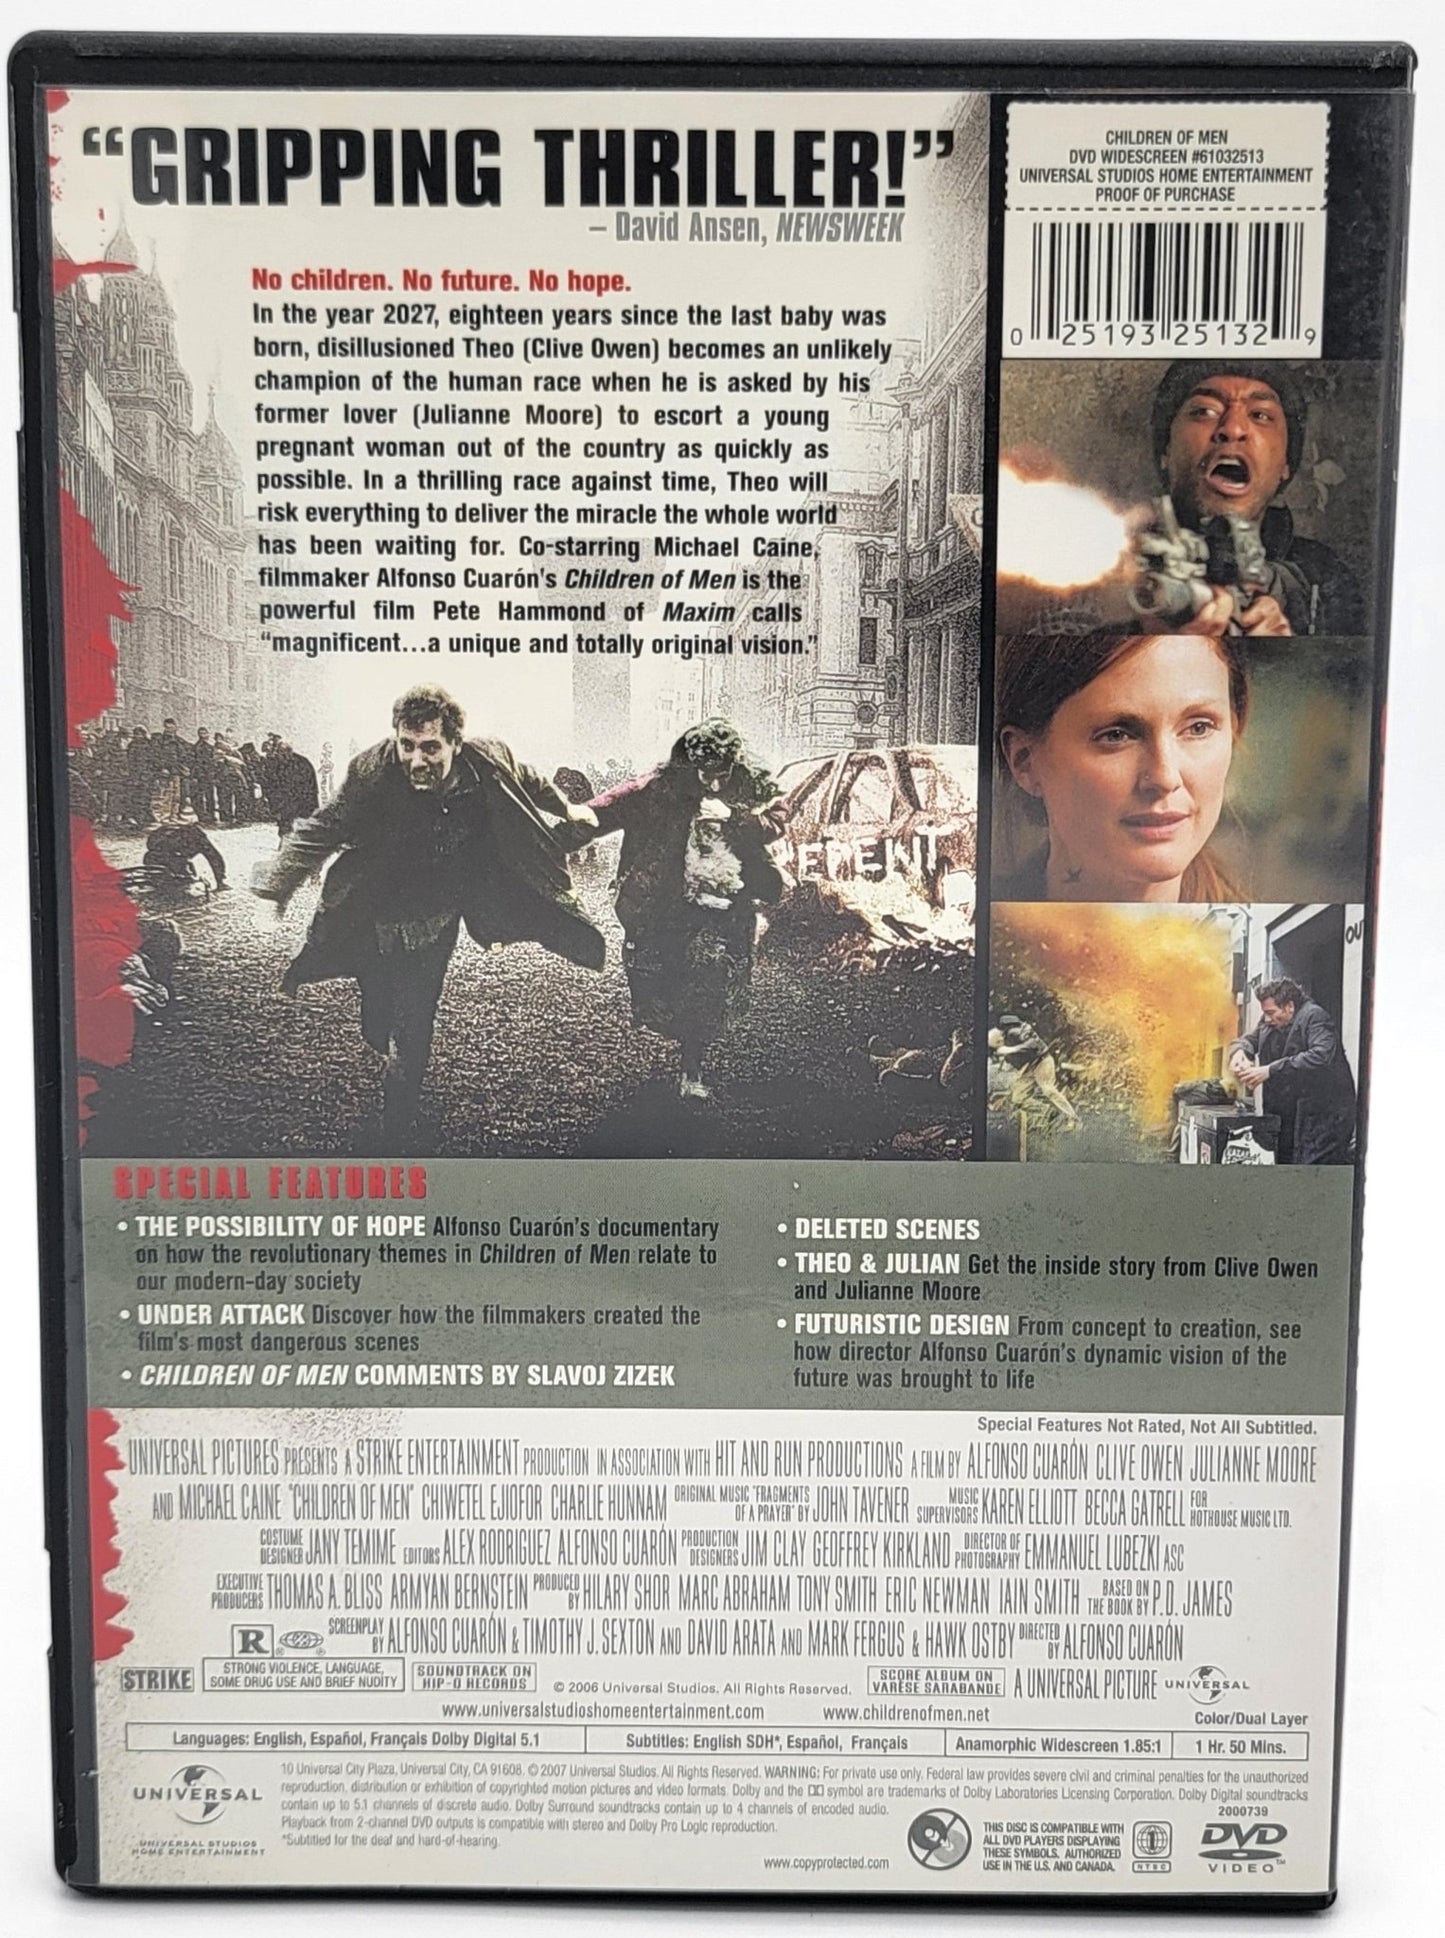 Universal Studios Home Entertainment - Children of Men | DVD | Widescreen - DVD - Steady Bunny Shop